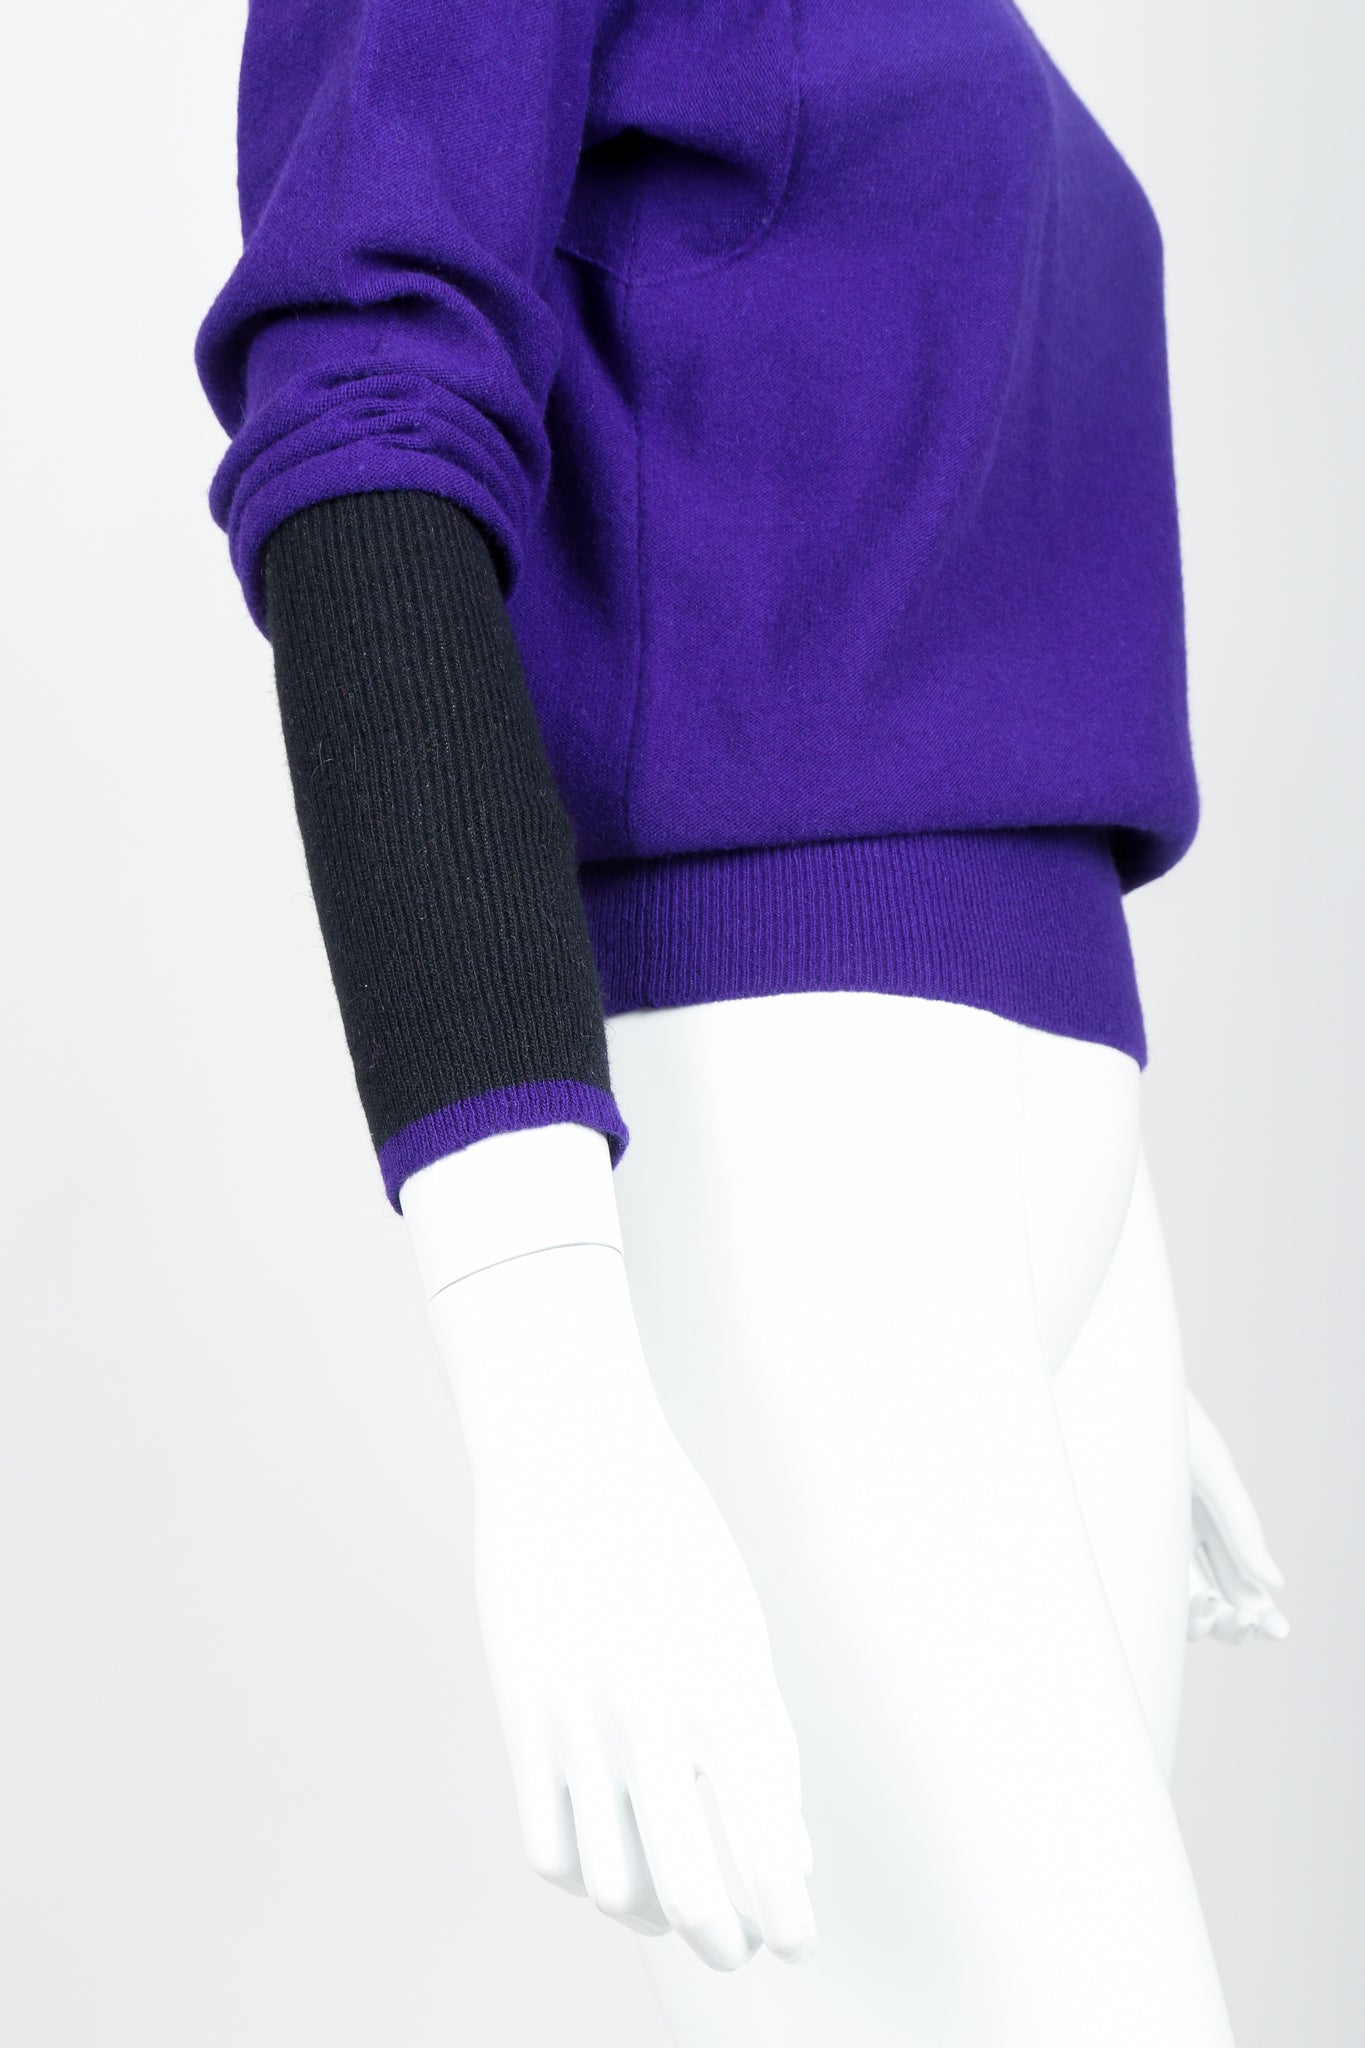 Vintage Sonia Rykiel Purple Knit Turtleneck Sweater on Mannequin Sleeve Detail at Recess